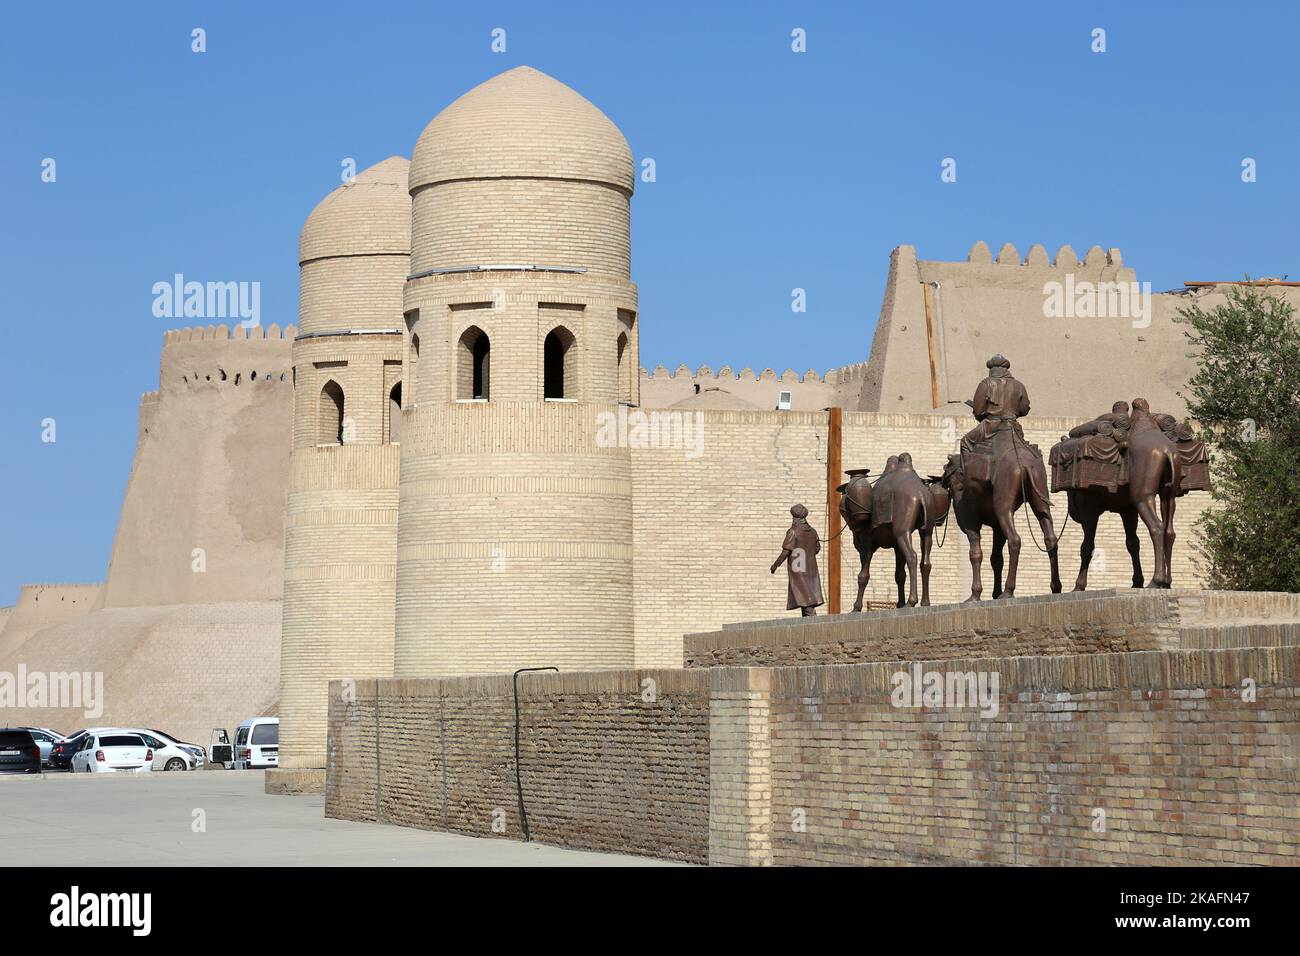 Statua di al-Khwārizmī a ATA Darvoza (porta del Padre) o porta Ovest, Ichan Kala (fortezza interna), Khiva, Provincia di Khorezm, Uzbekistan, Asia Centrale Foto Stock